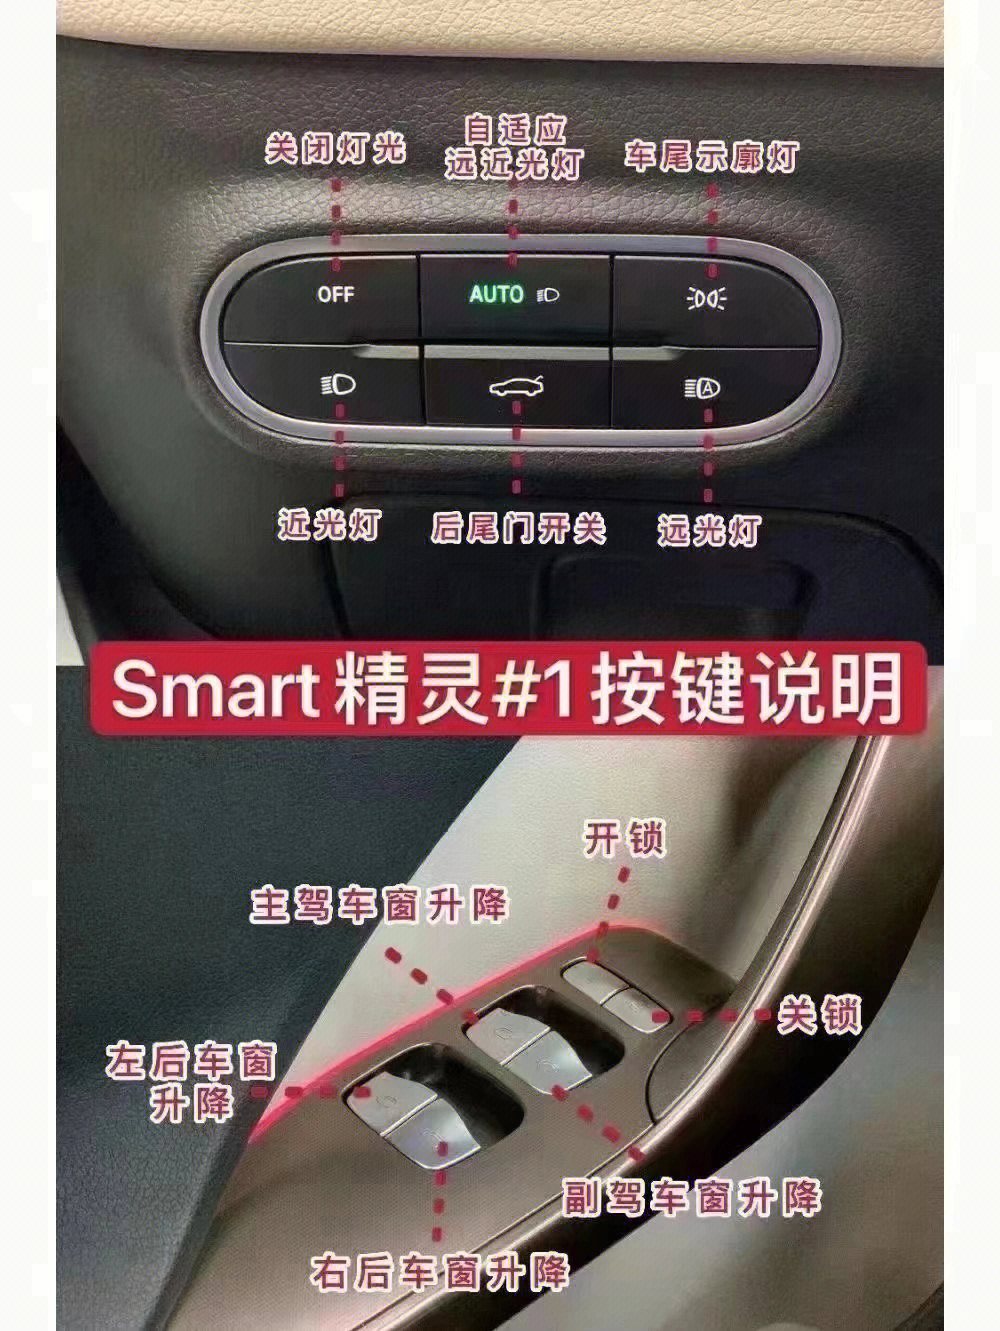 smart按钮功能图解图片